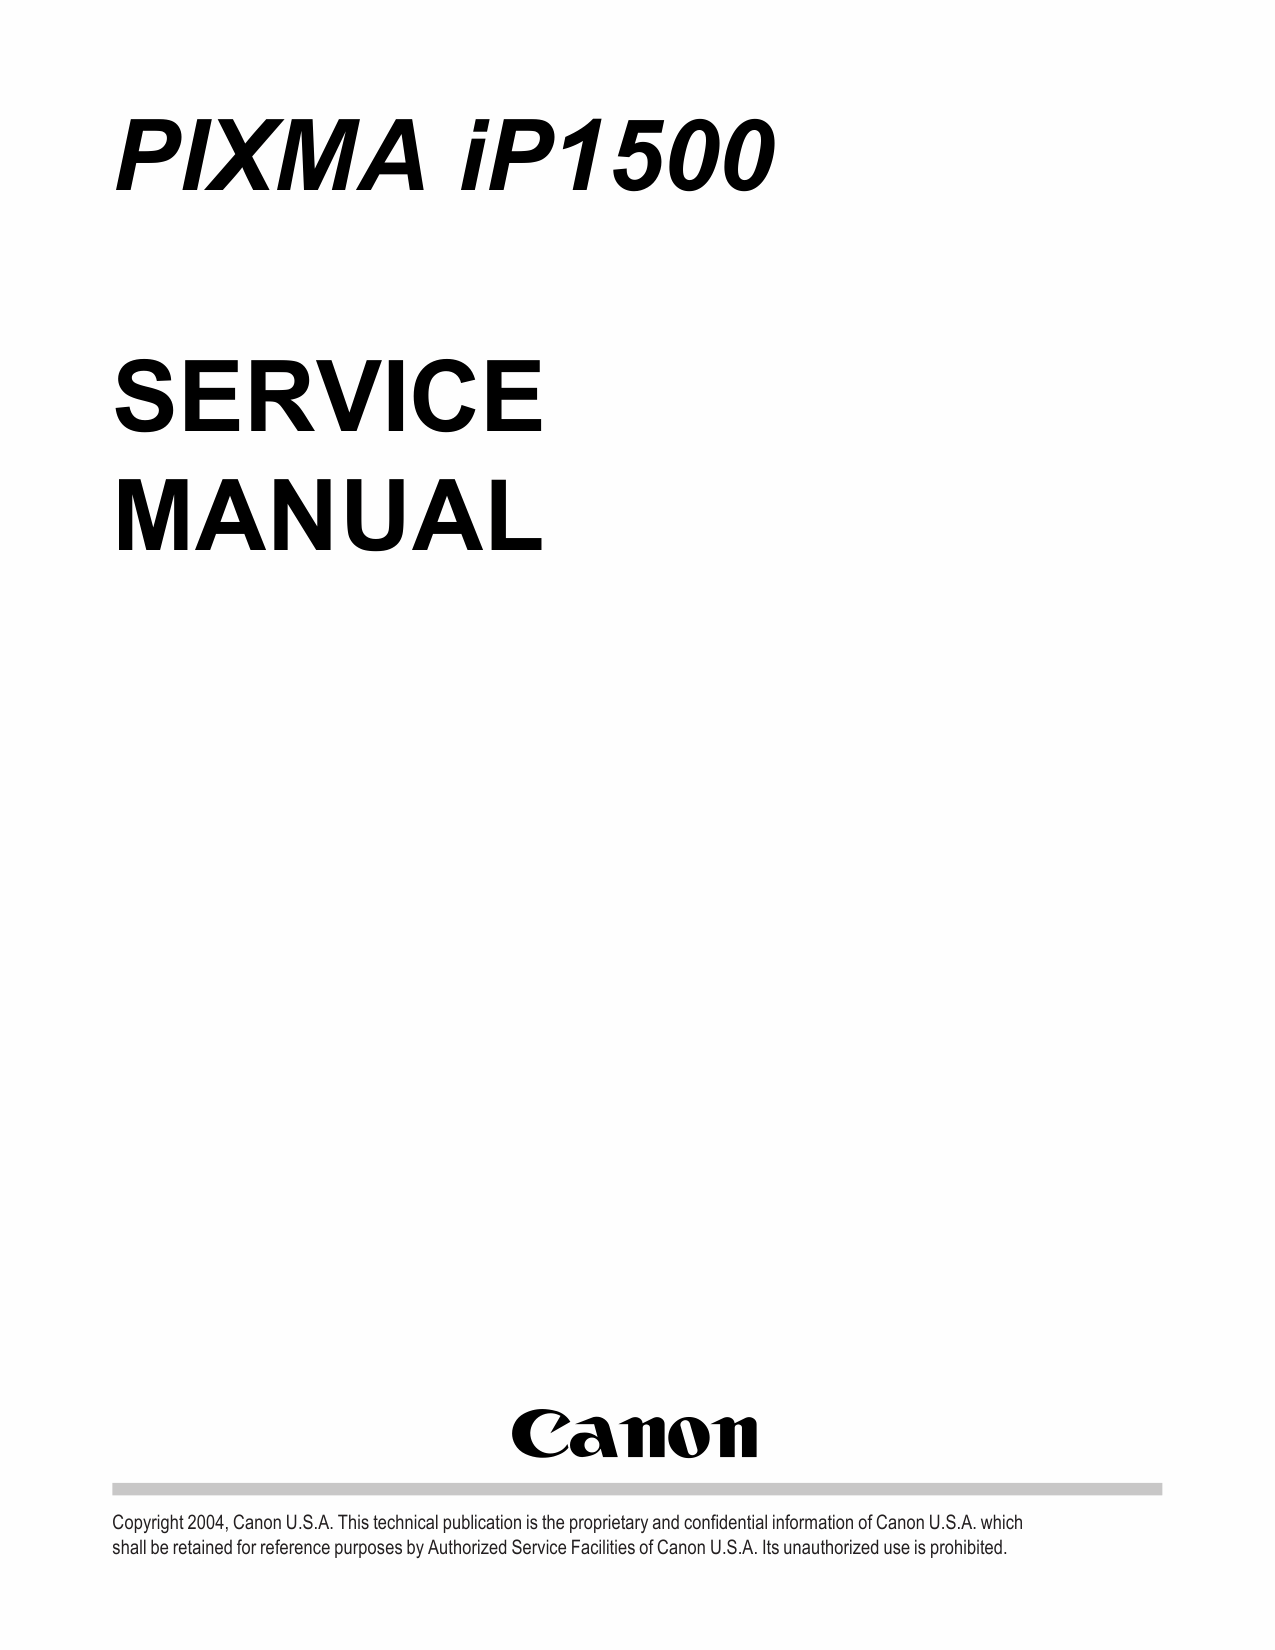 Canon PIXMA iP1500 Service Manual-1